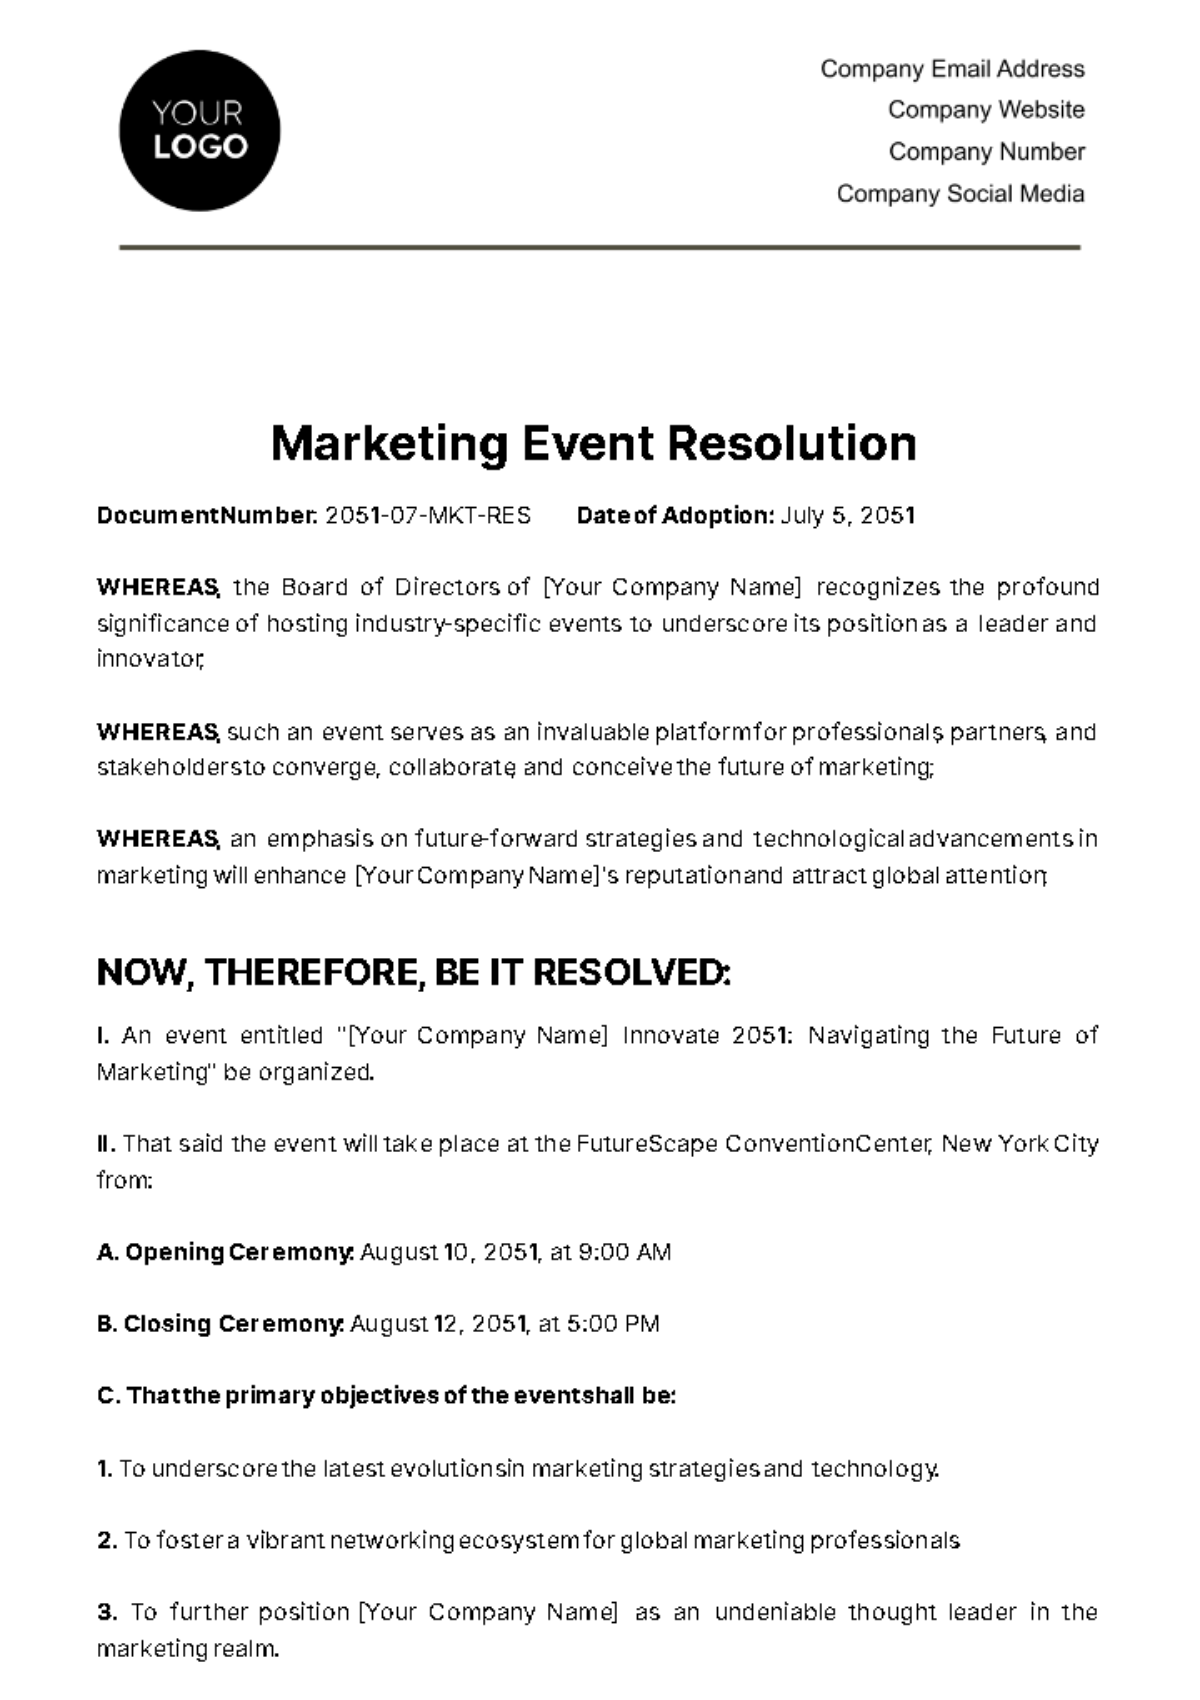 Marketing Event Resolution Template